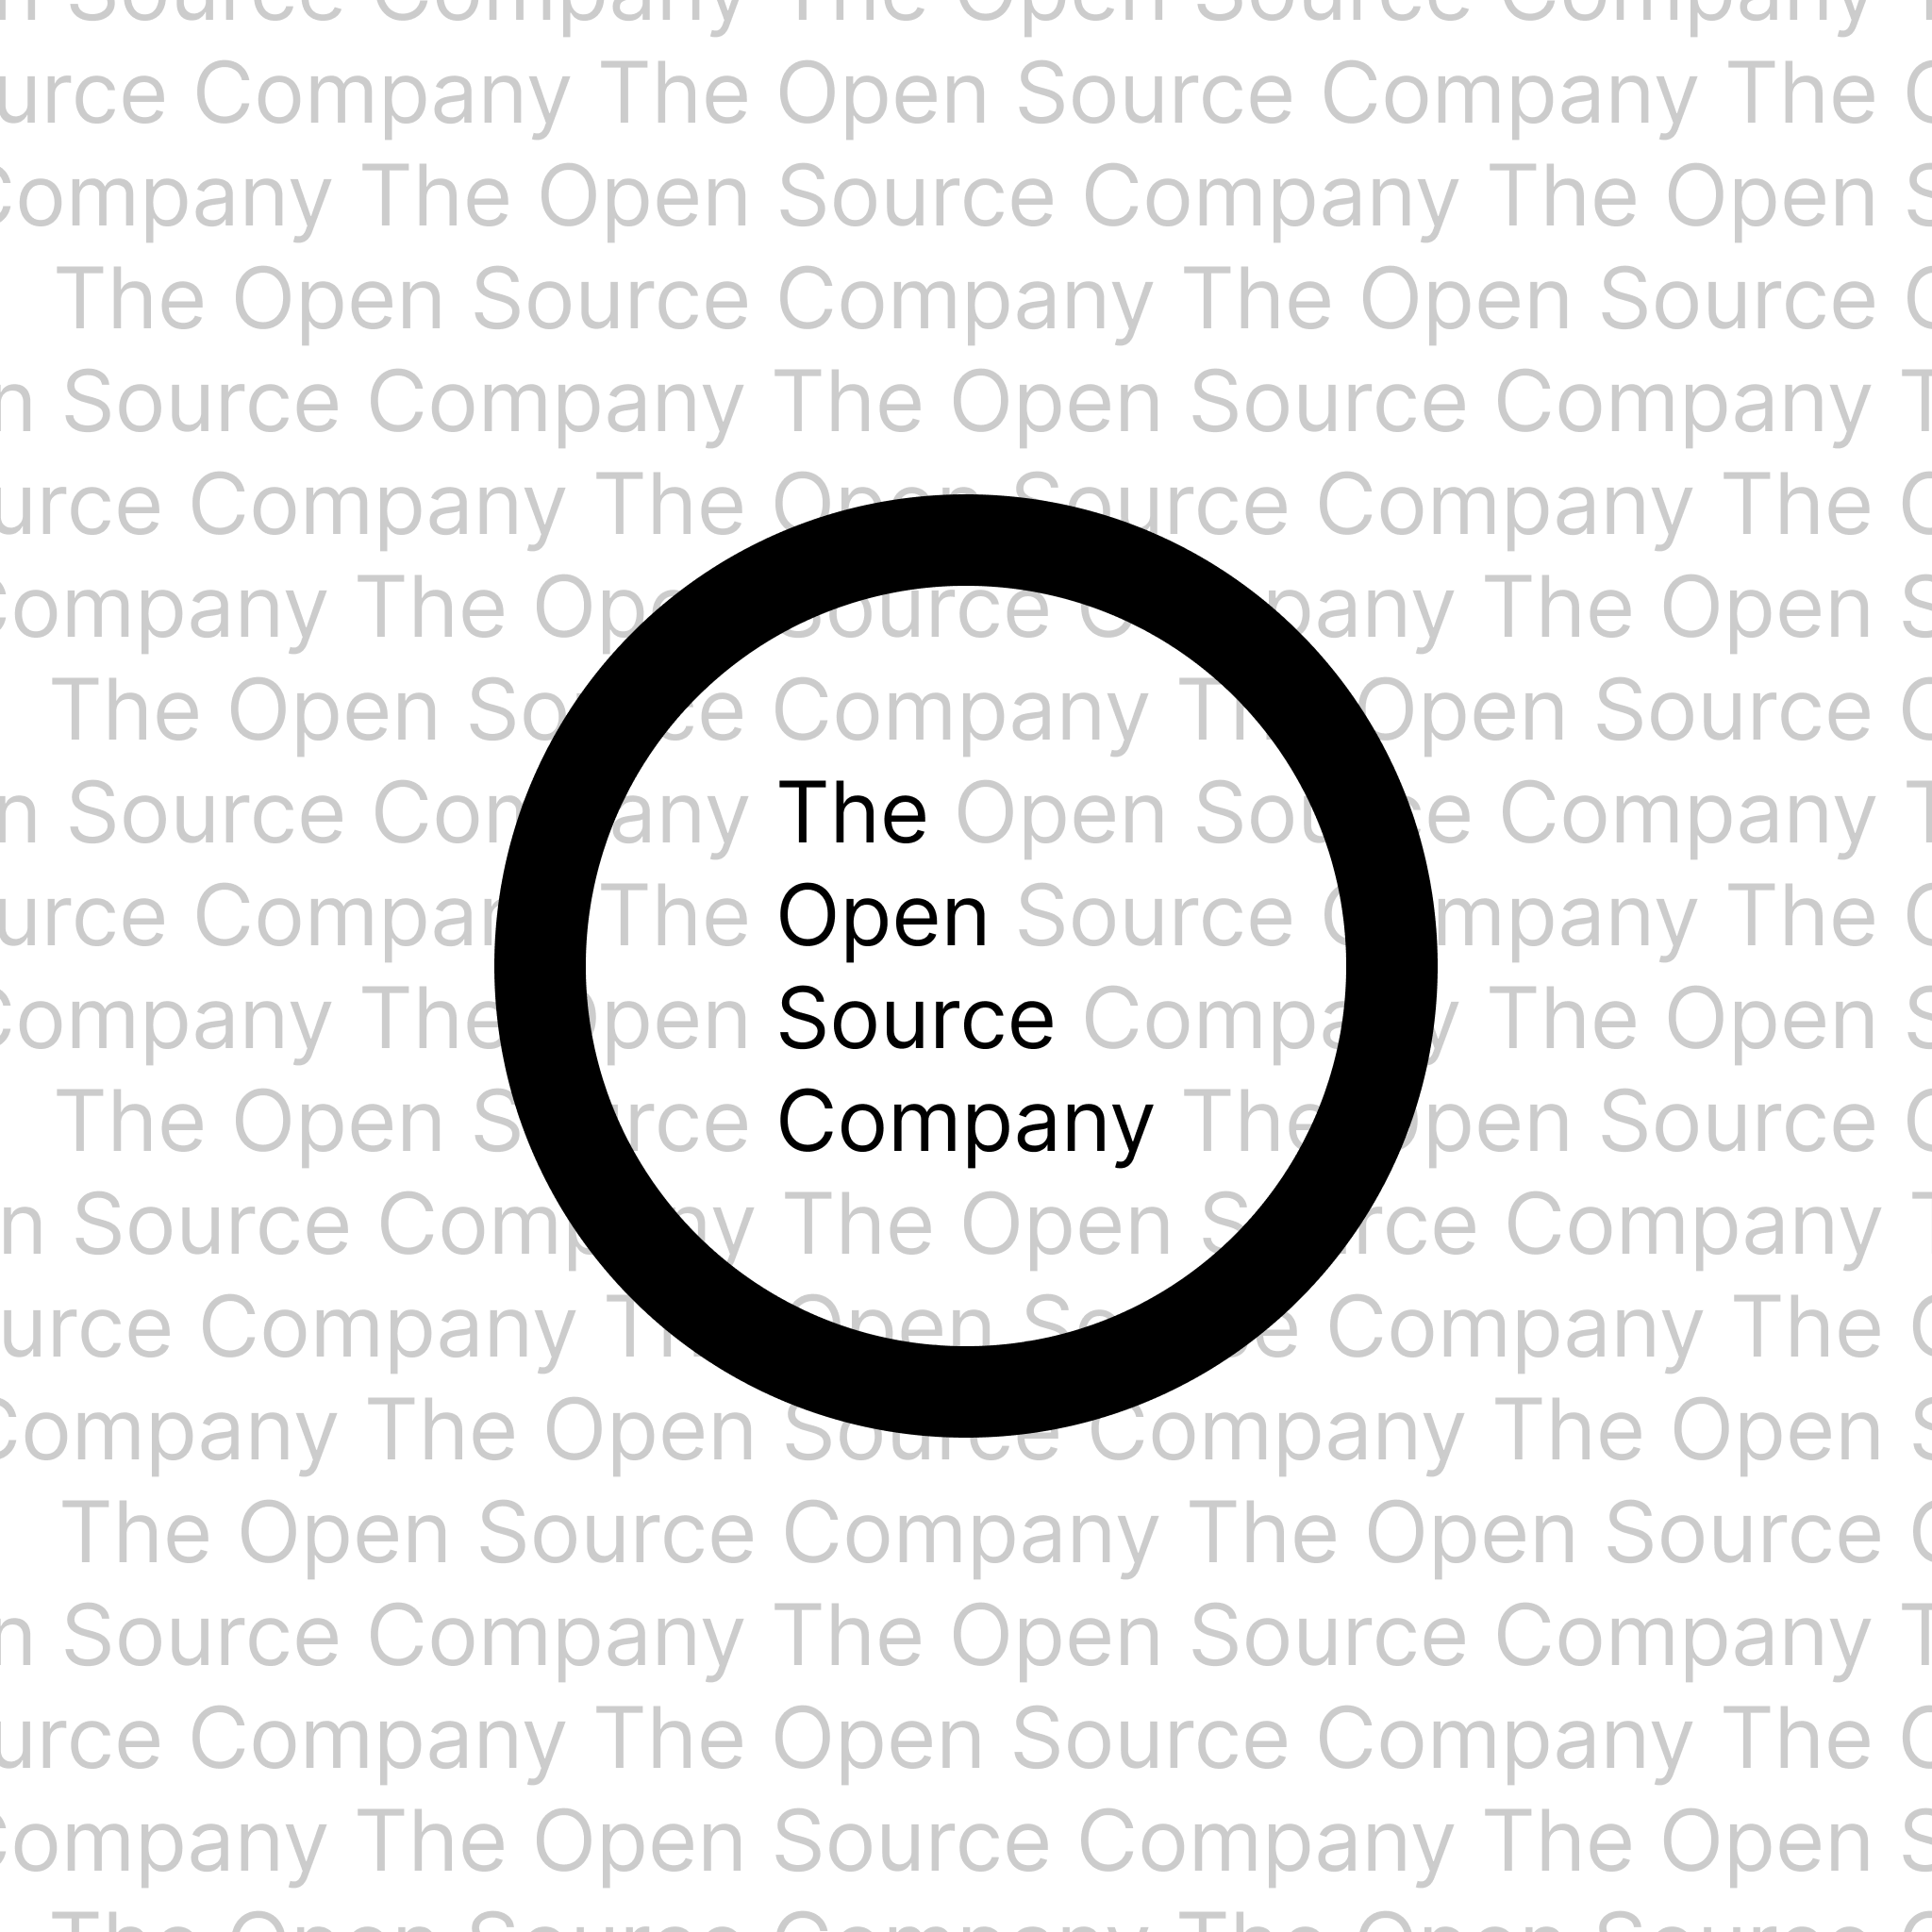 The Open Source Company logo